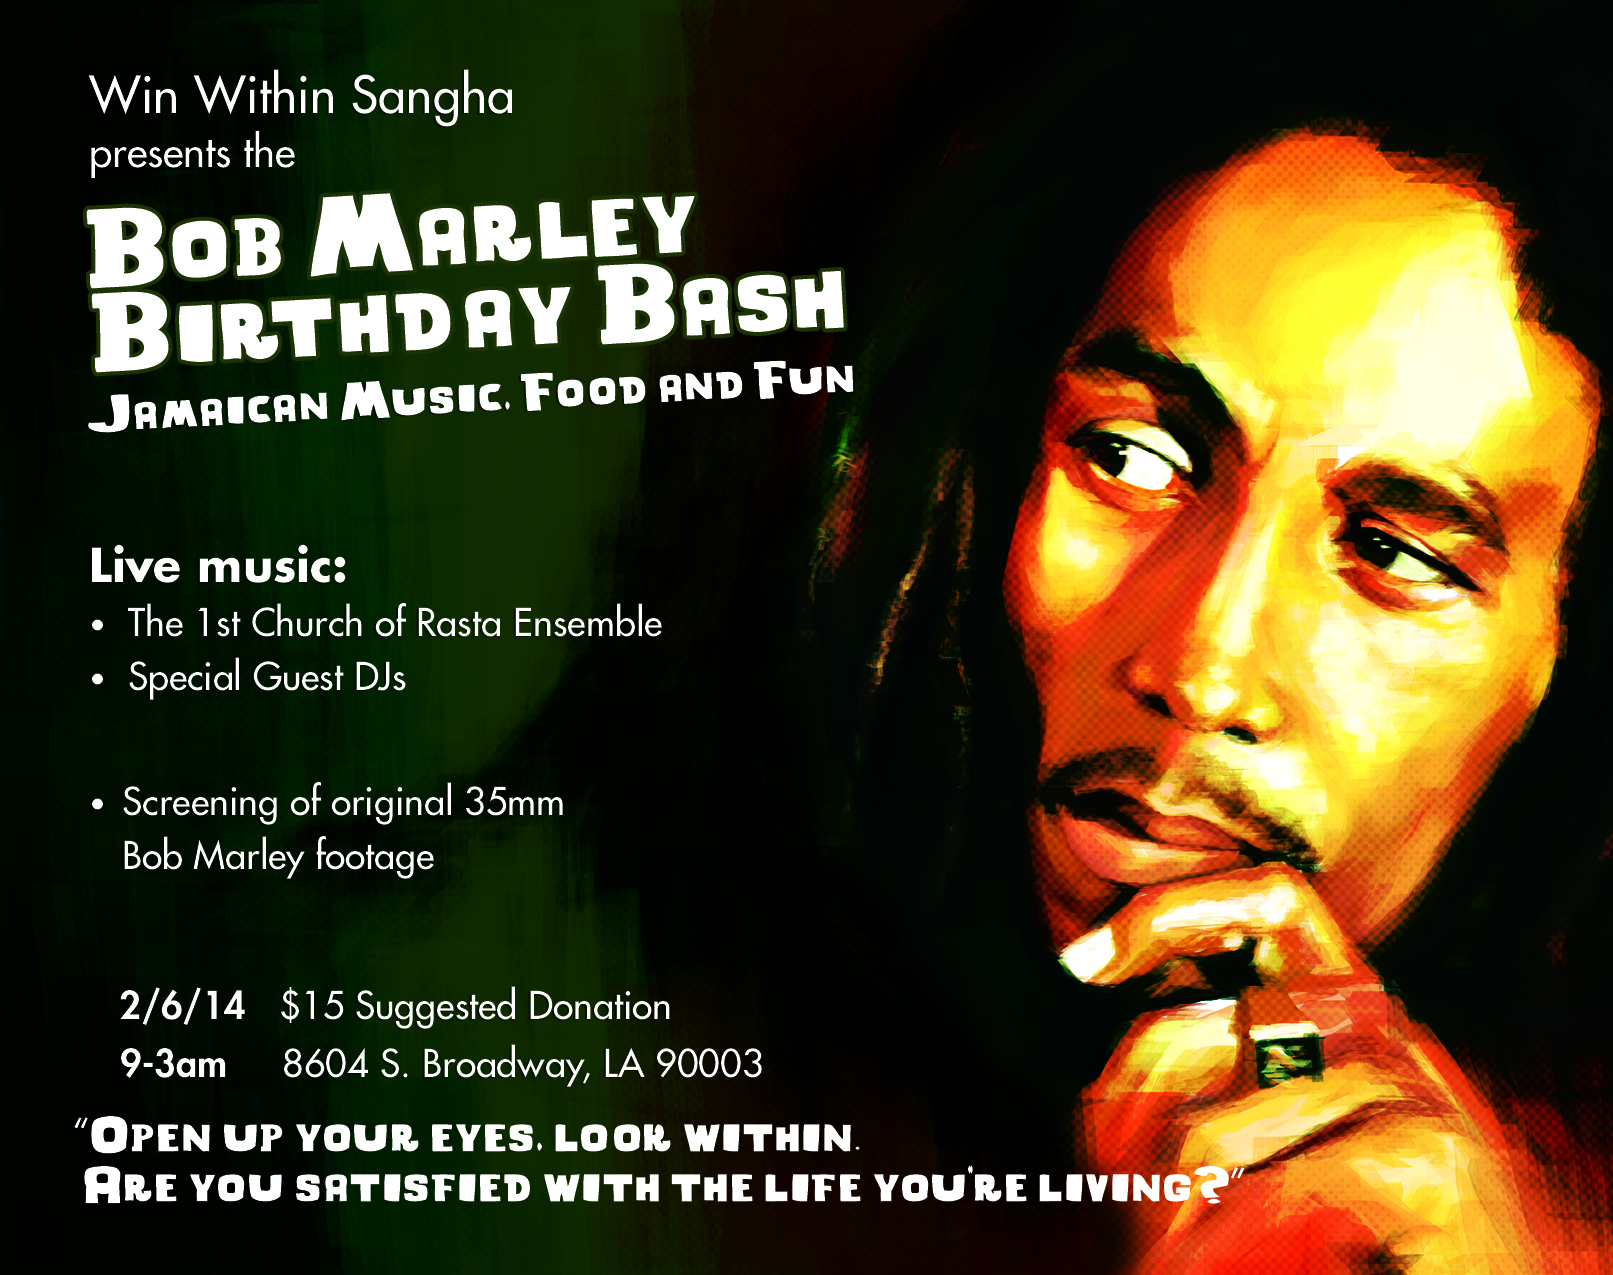 Buy Tickets to WWS Bob Marley Birthday Bash in Los Angeles